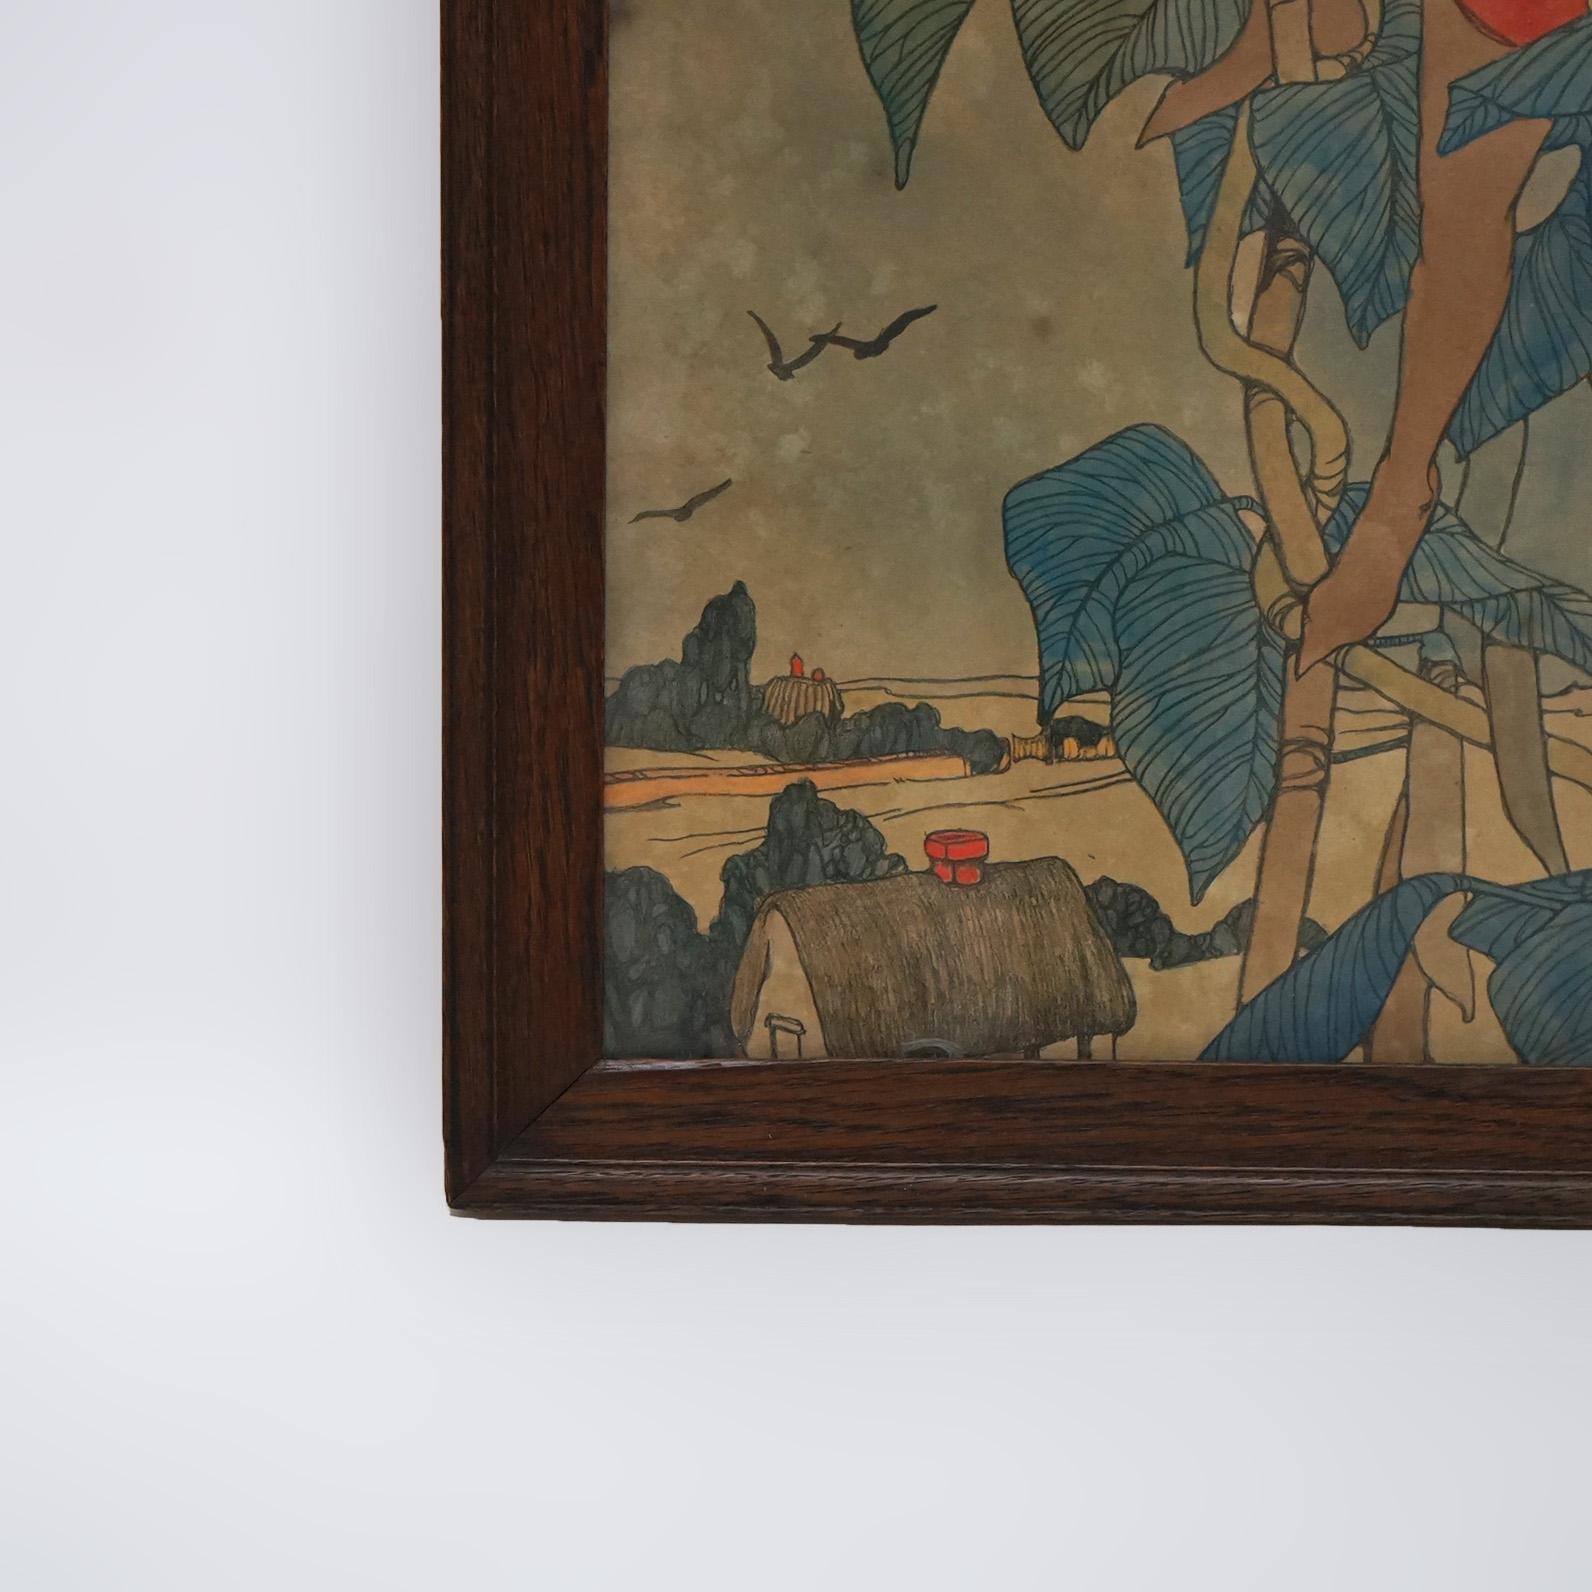 Antique Elizabeth Tyler Lithograph “Jack And The Beanstalk”, Framed, C1920 For Sale 1